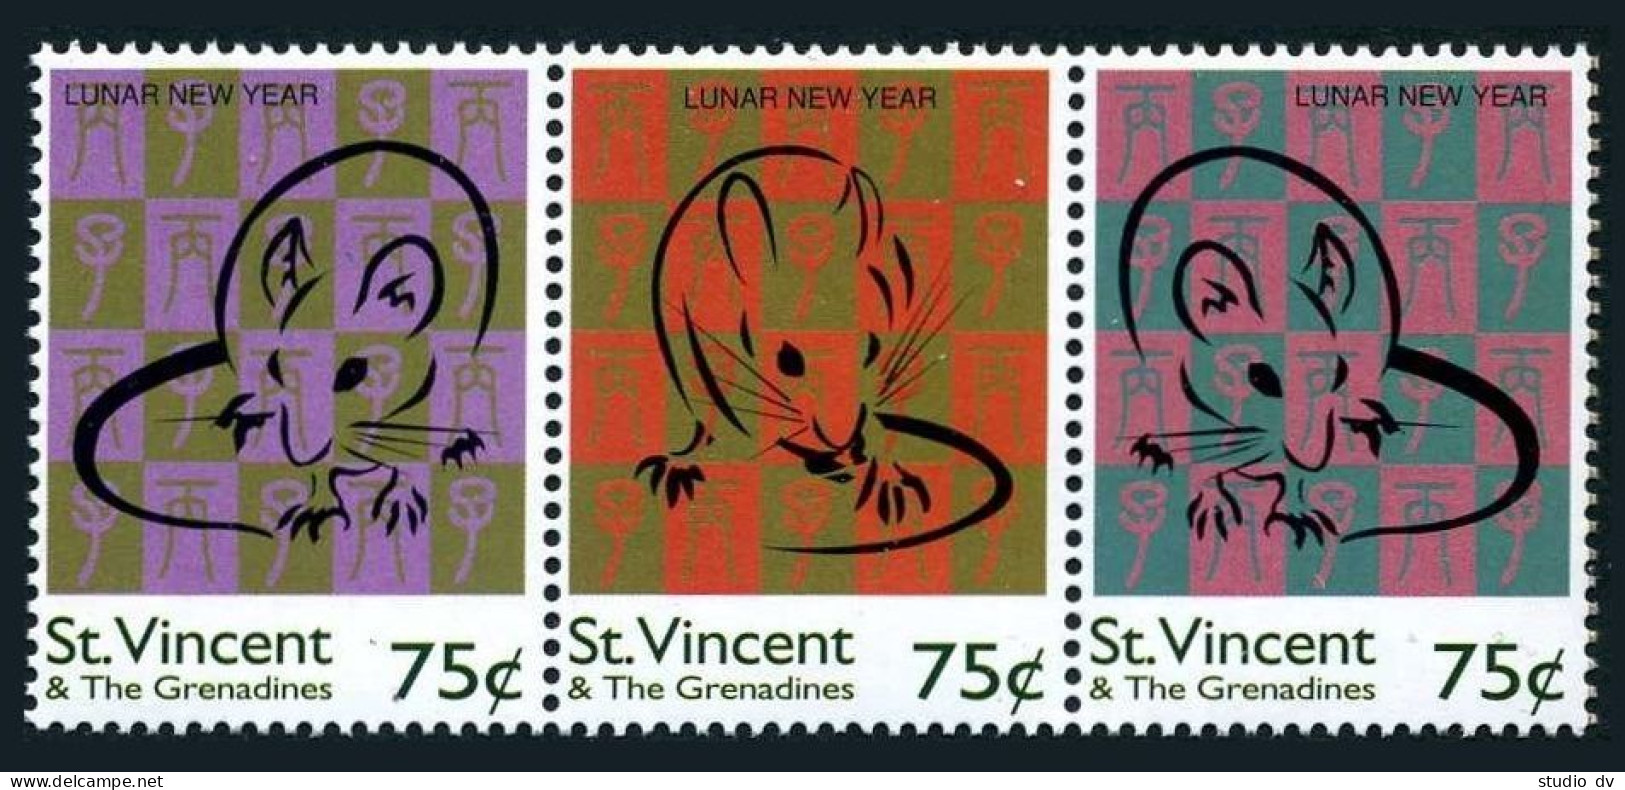 St Vincent 2241 Ac Strip,MNH.Mi 3372-3374. New Year 1996,Lunar Year Of The Rat. - St.Vincent (1979-...)